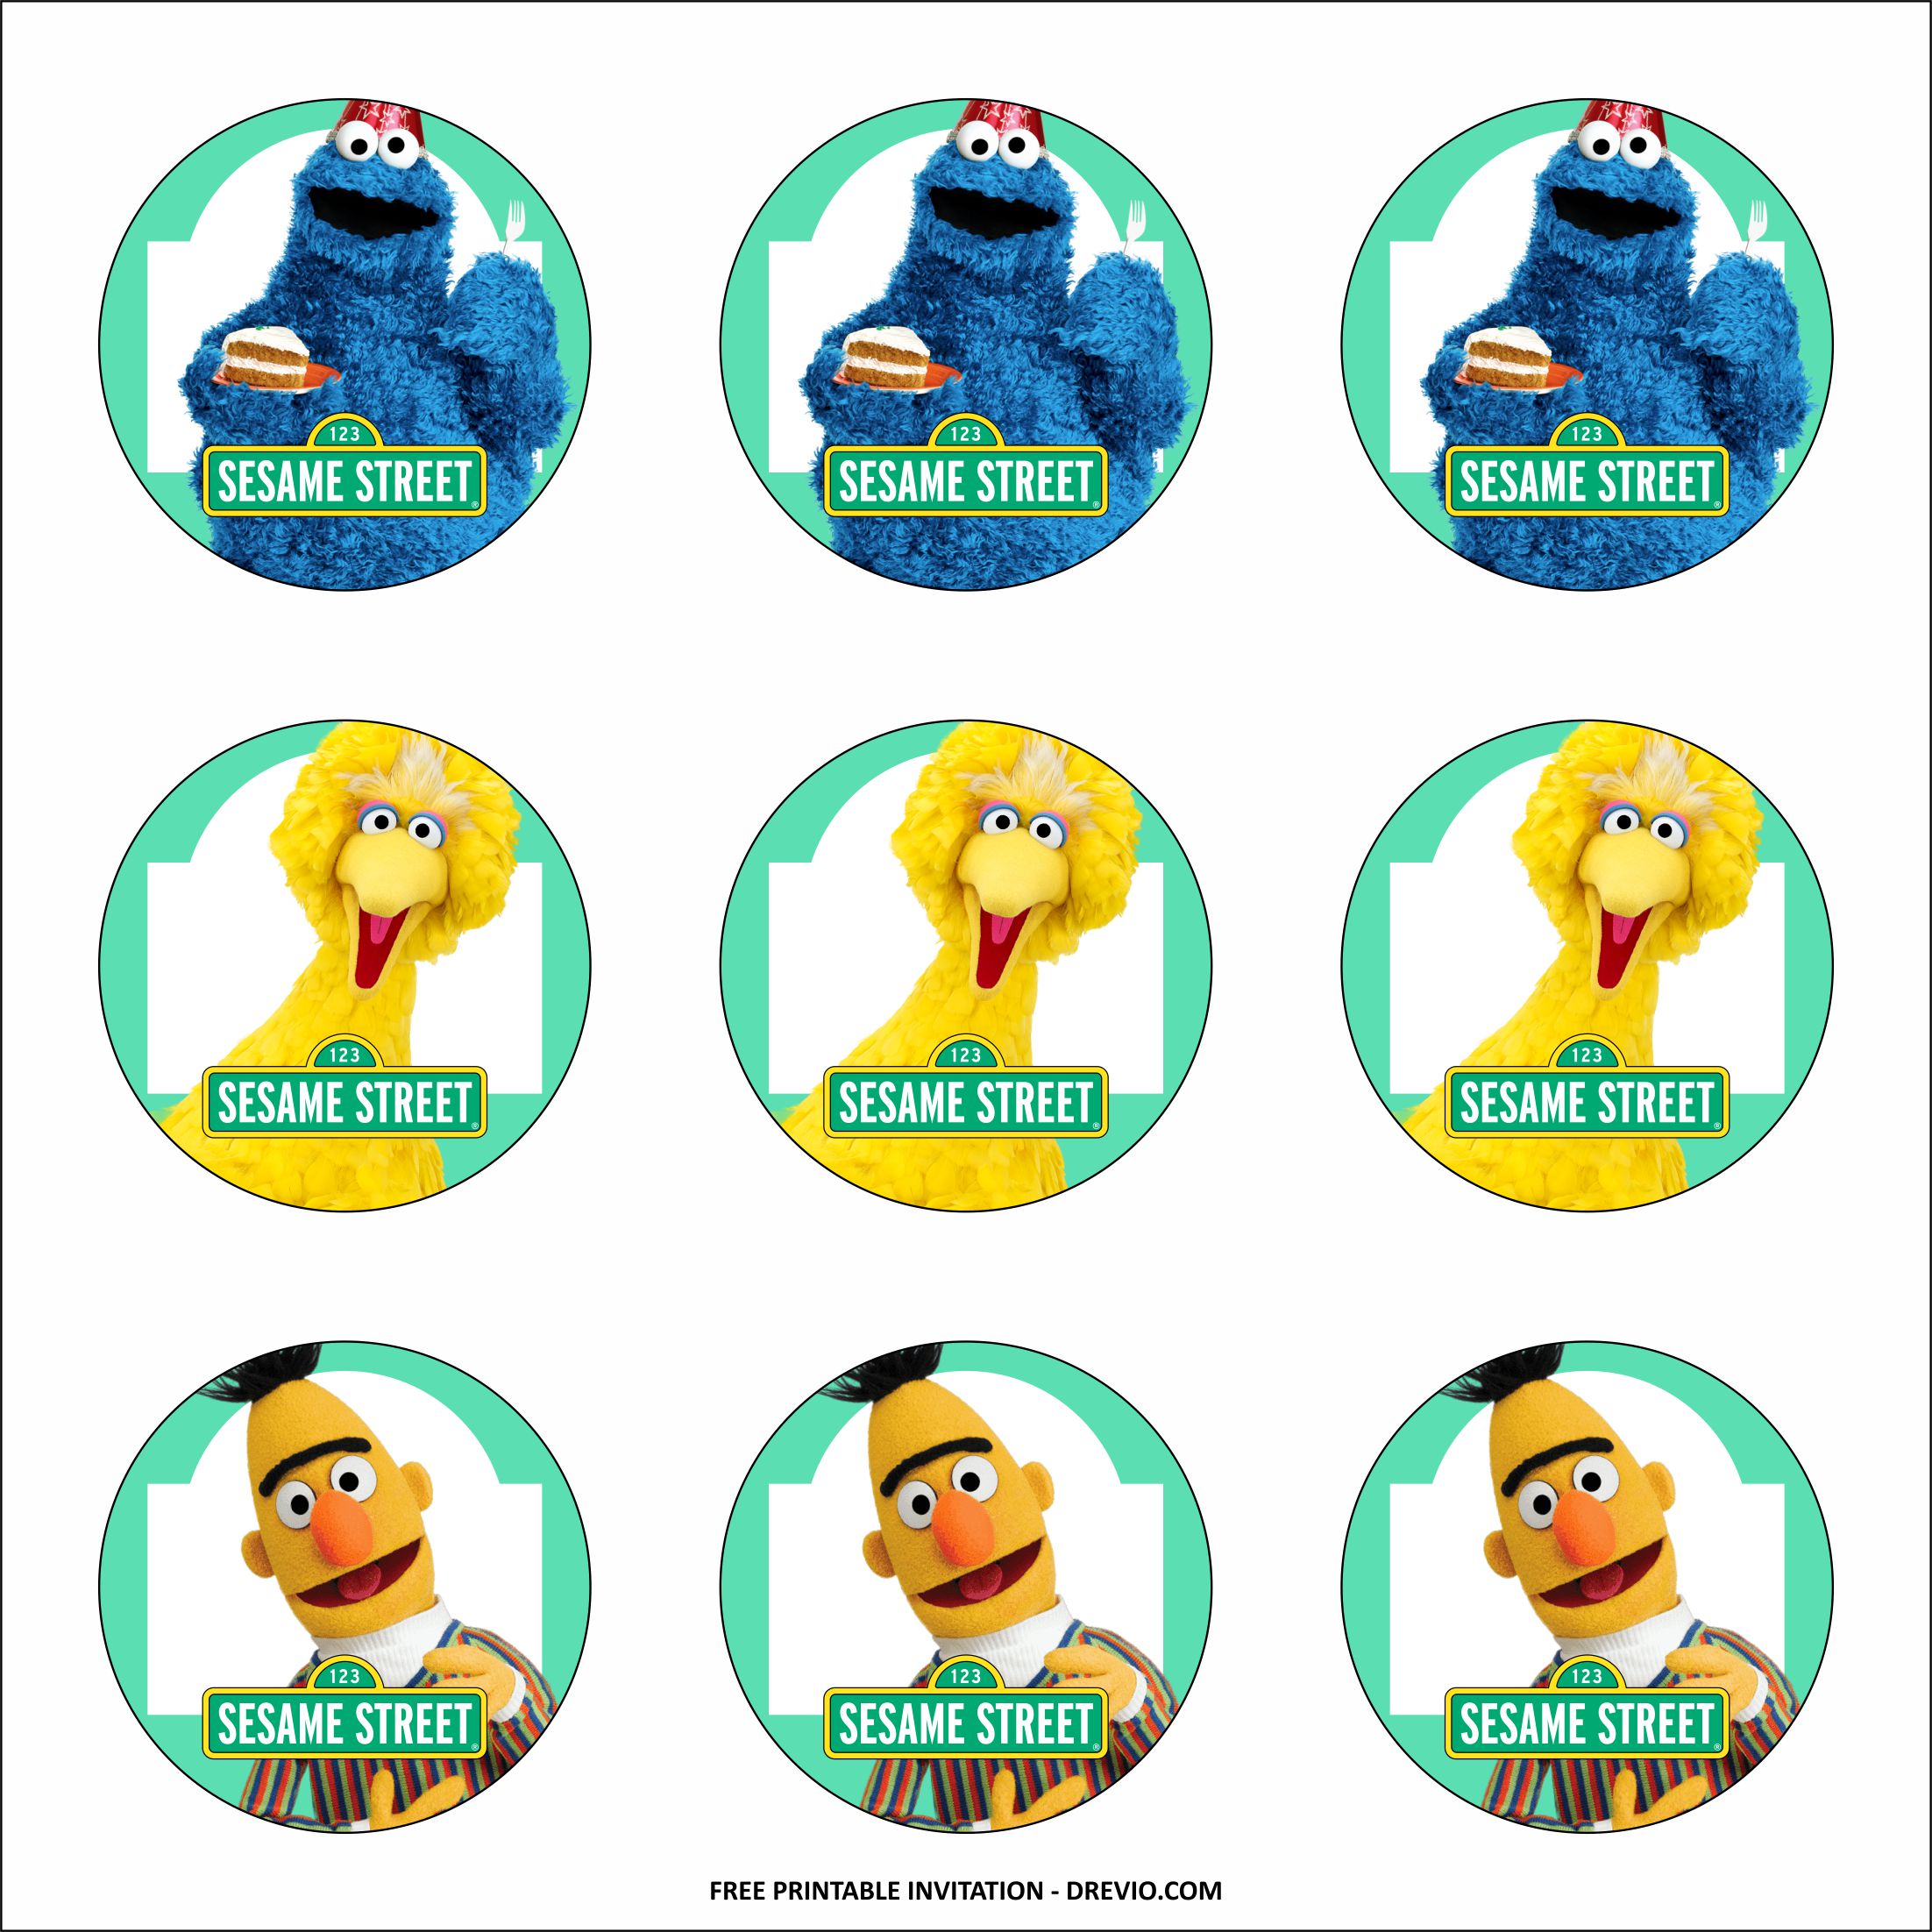 FREE PRINTABLE) – Sesame Street Birthday Party Kits Templates In Sesame Street Label Templates